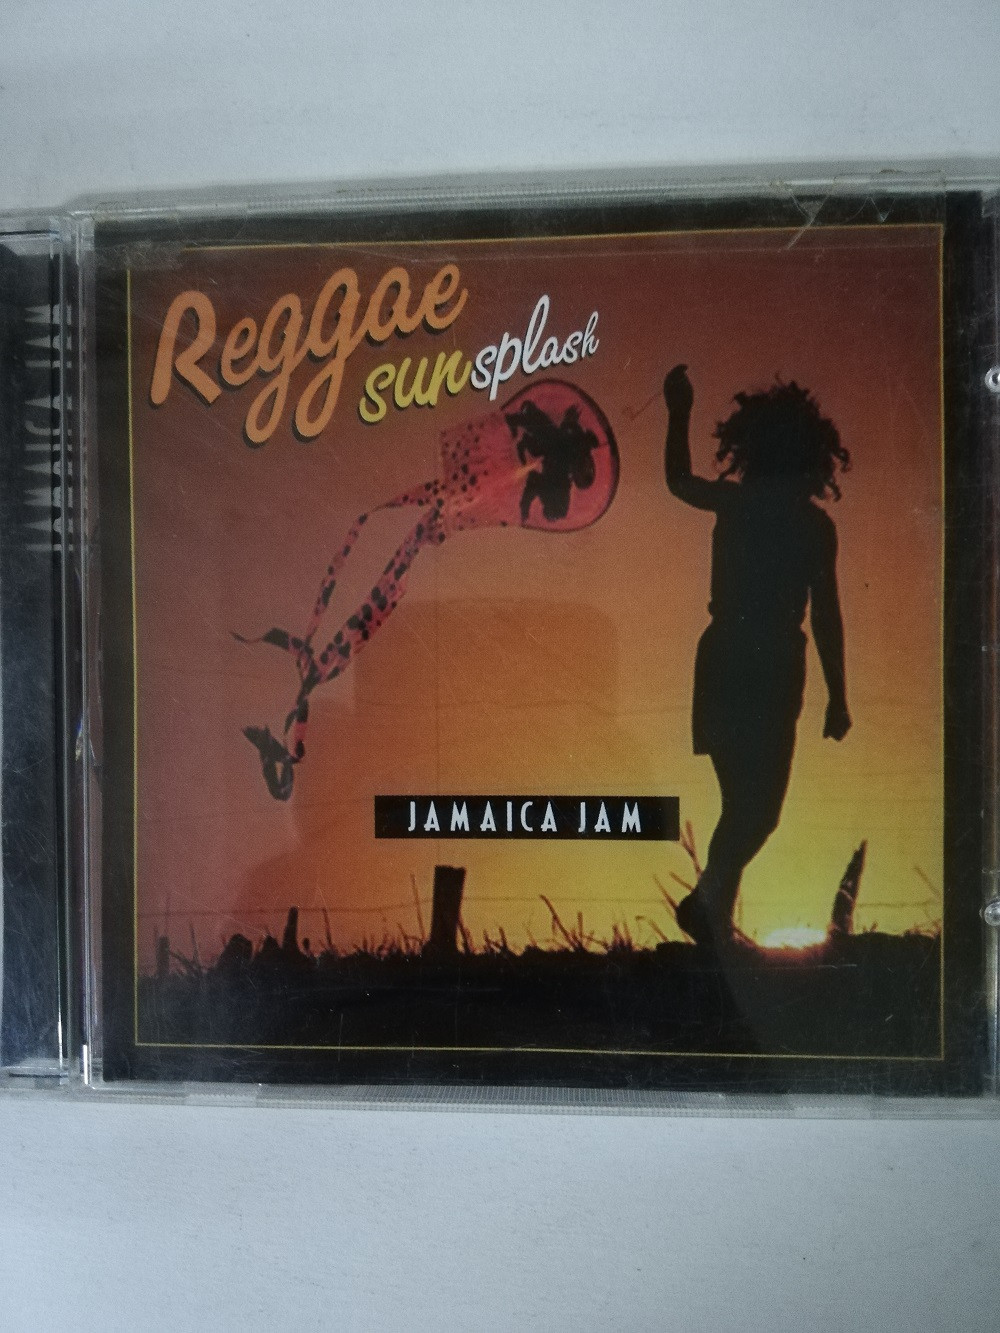 Imagen CD REGGAE SUNSPLASH - JAMAICA JAM